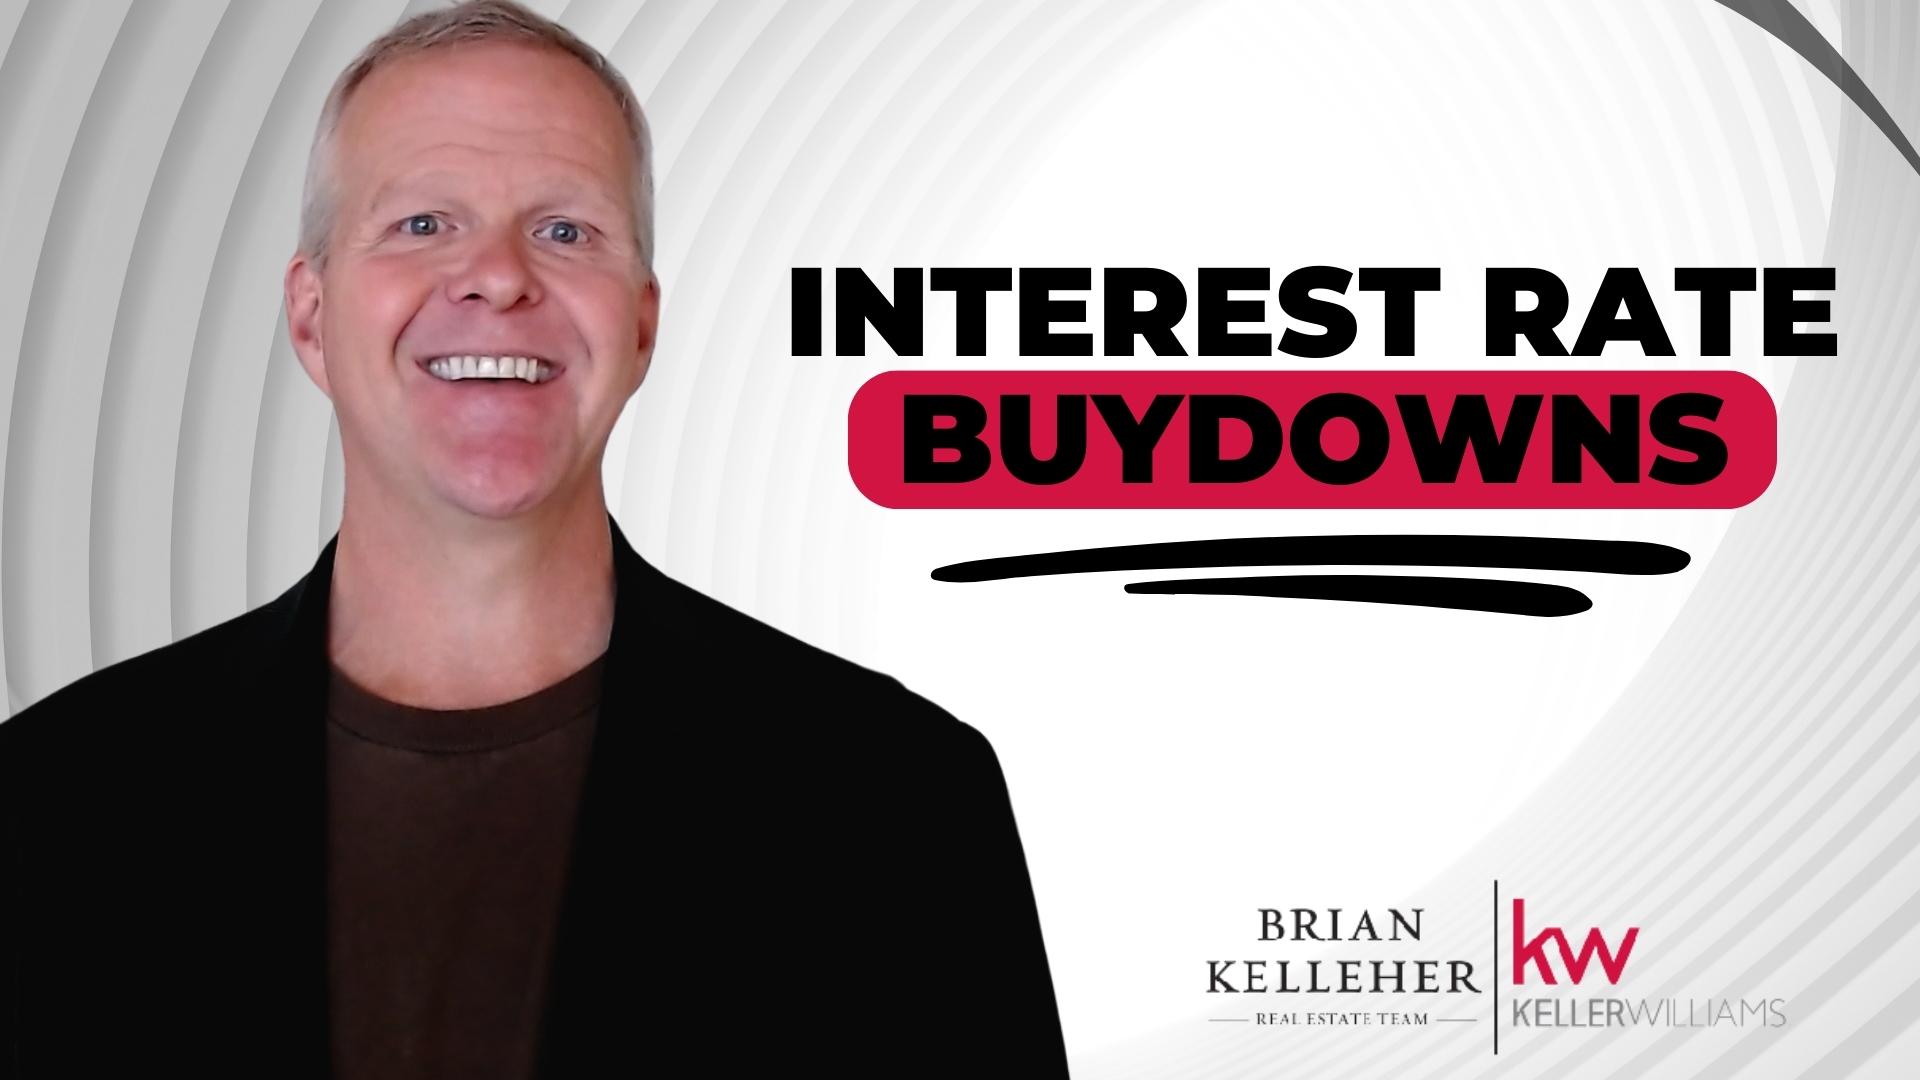 Real Estate Expert Explains: Interest Rate Buydowns